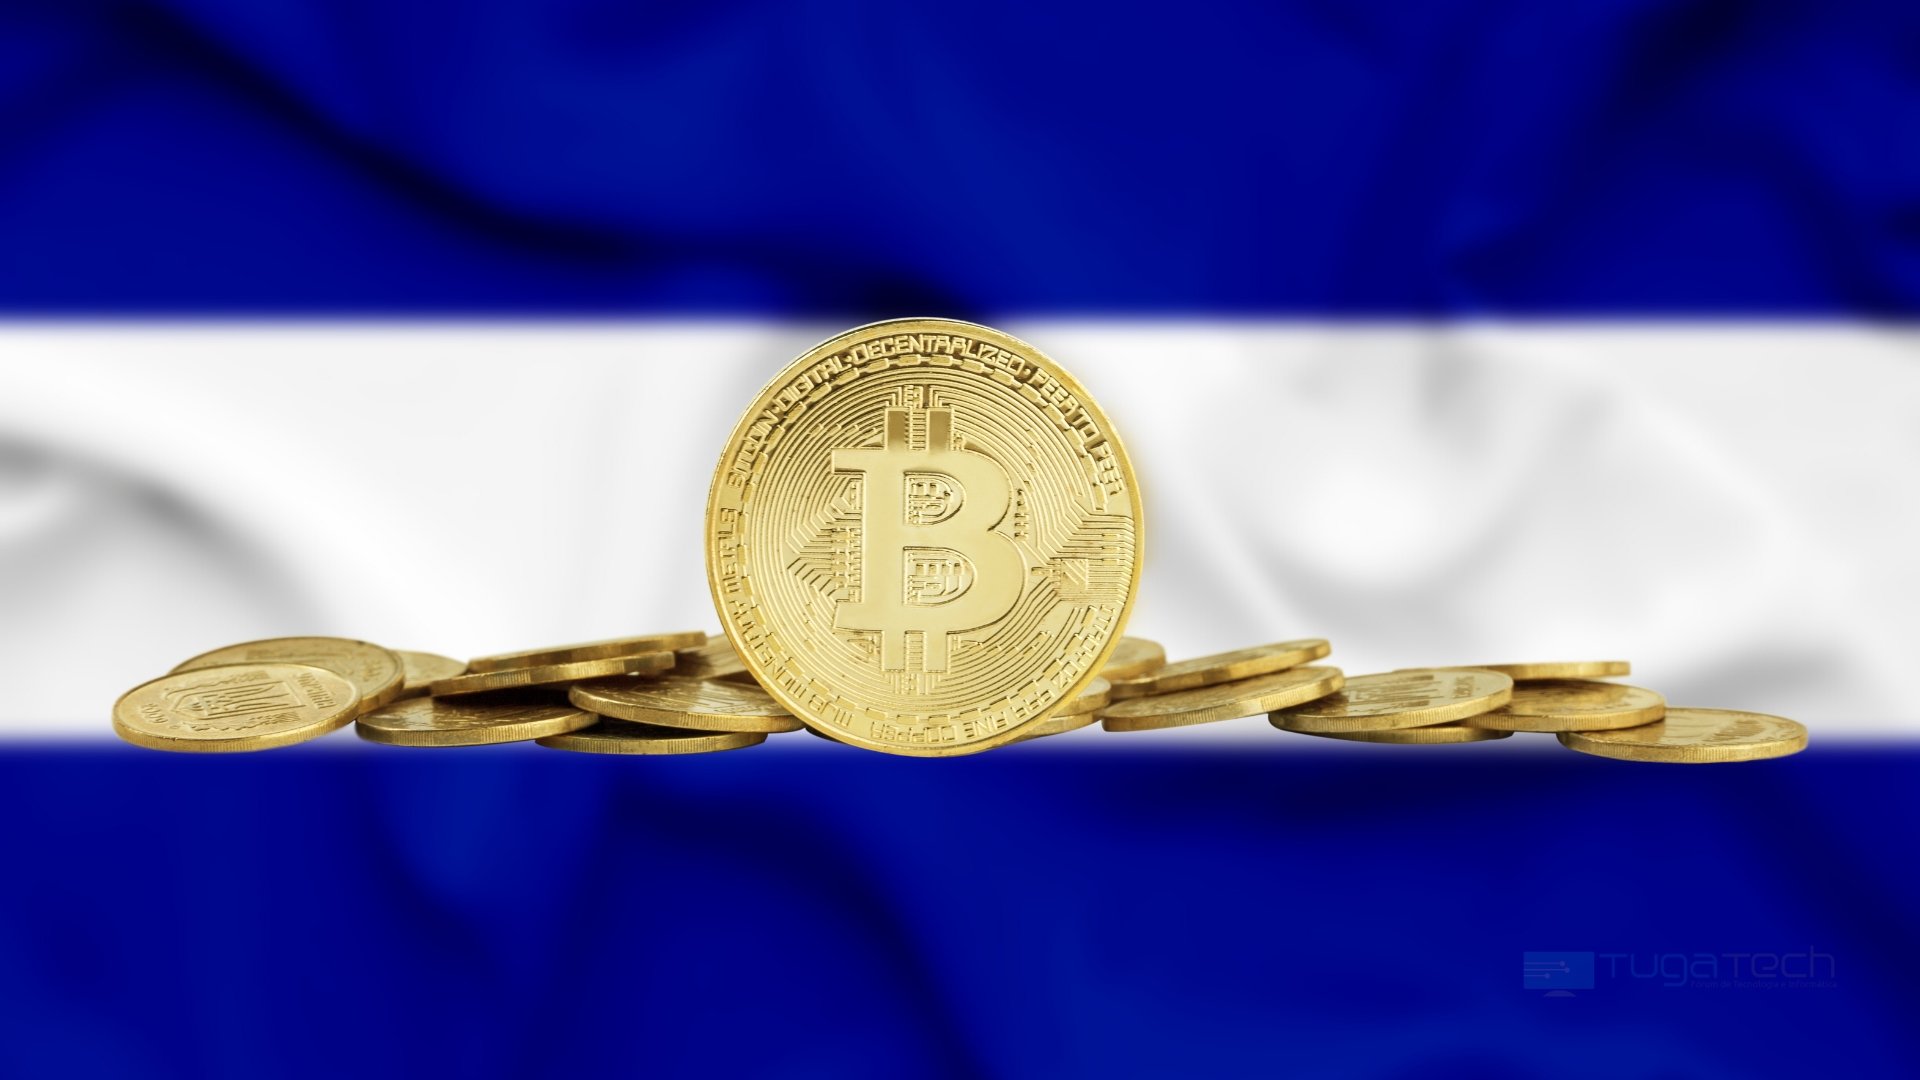 El Salvador bitcoin